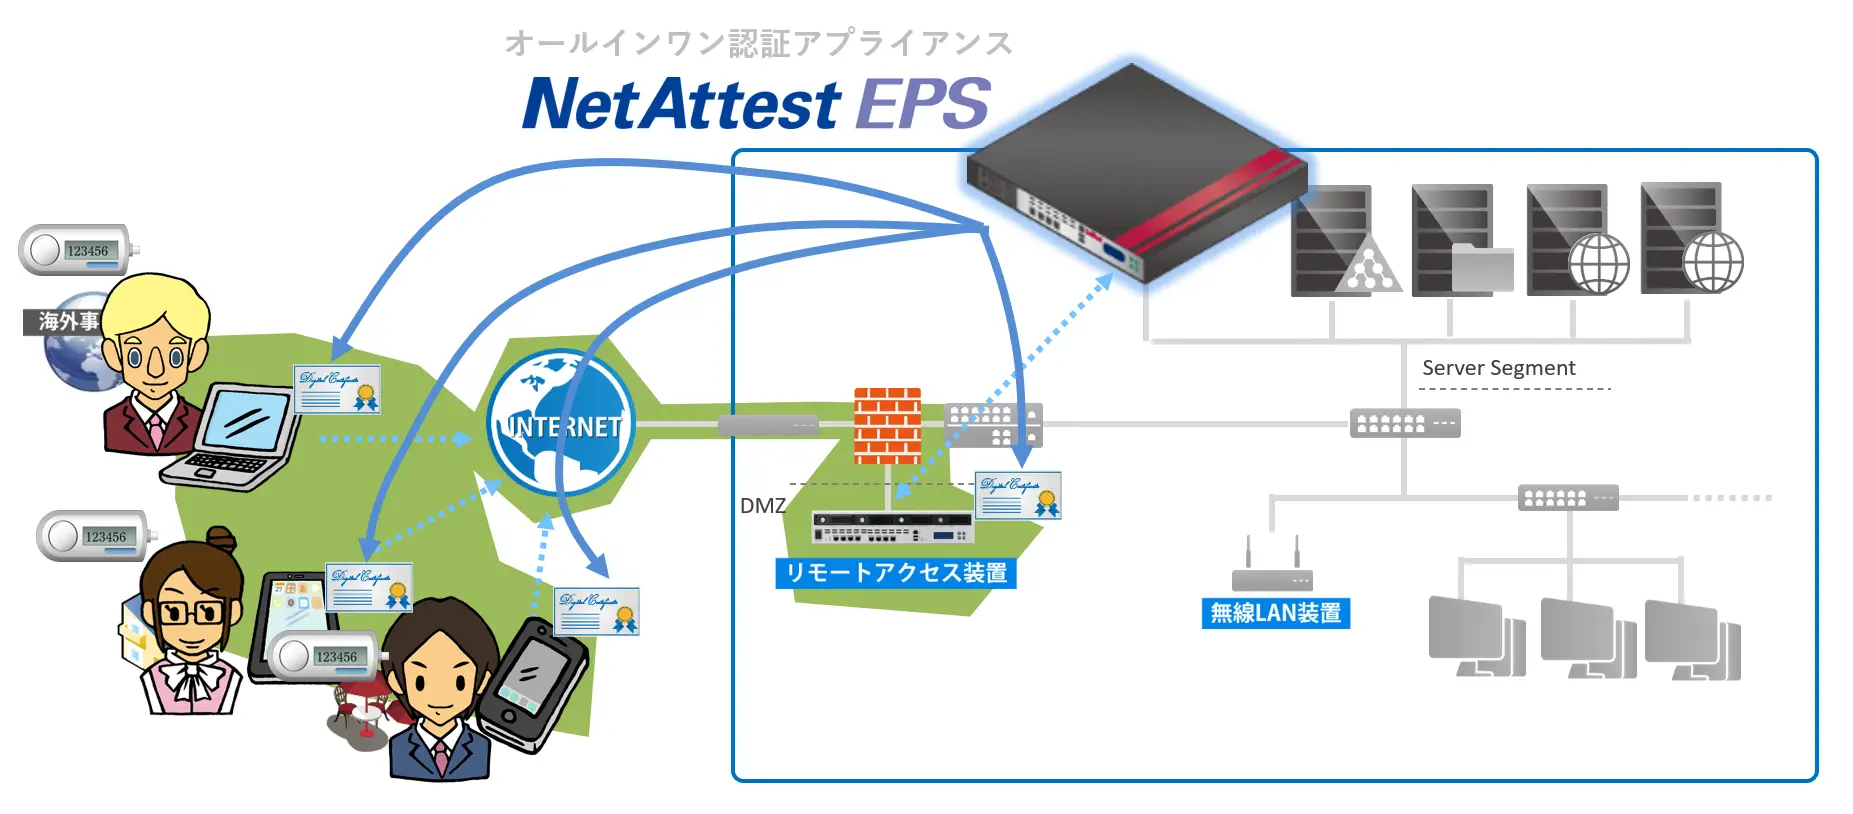 NetAttest EPSによる安全なリモートアクセス環境の実現